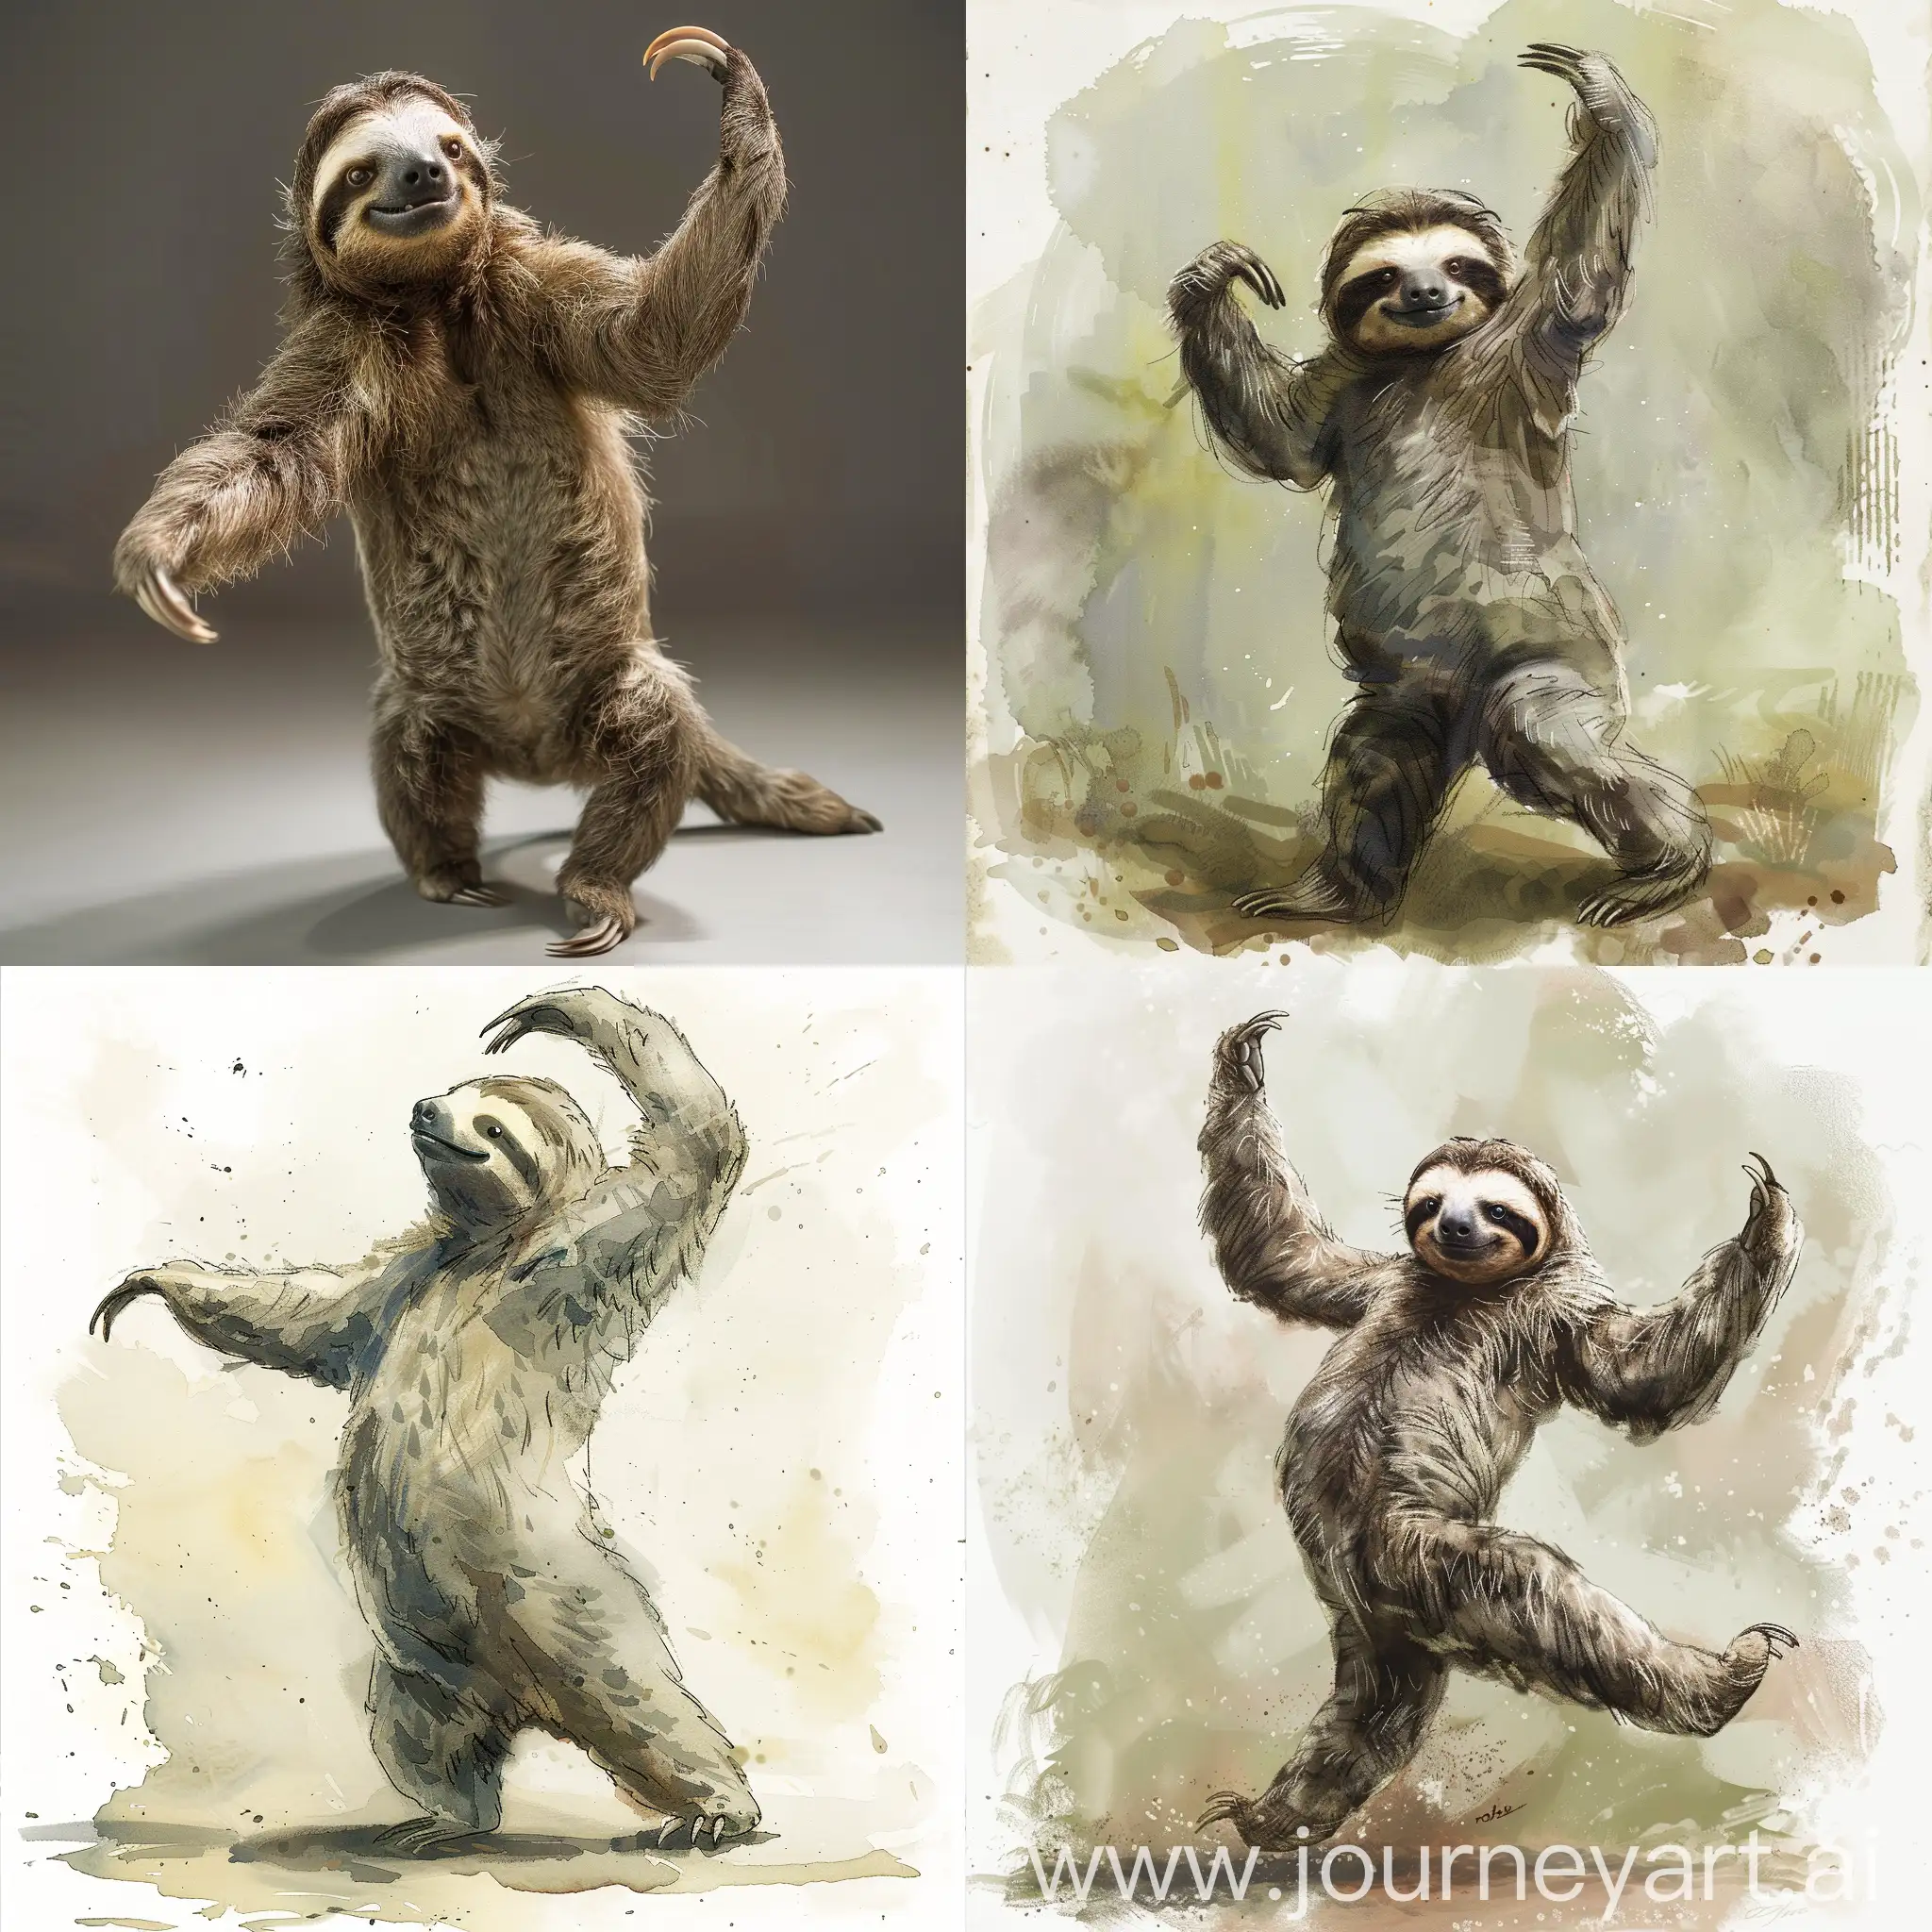 Playful-Dancing-Sloth-Art